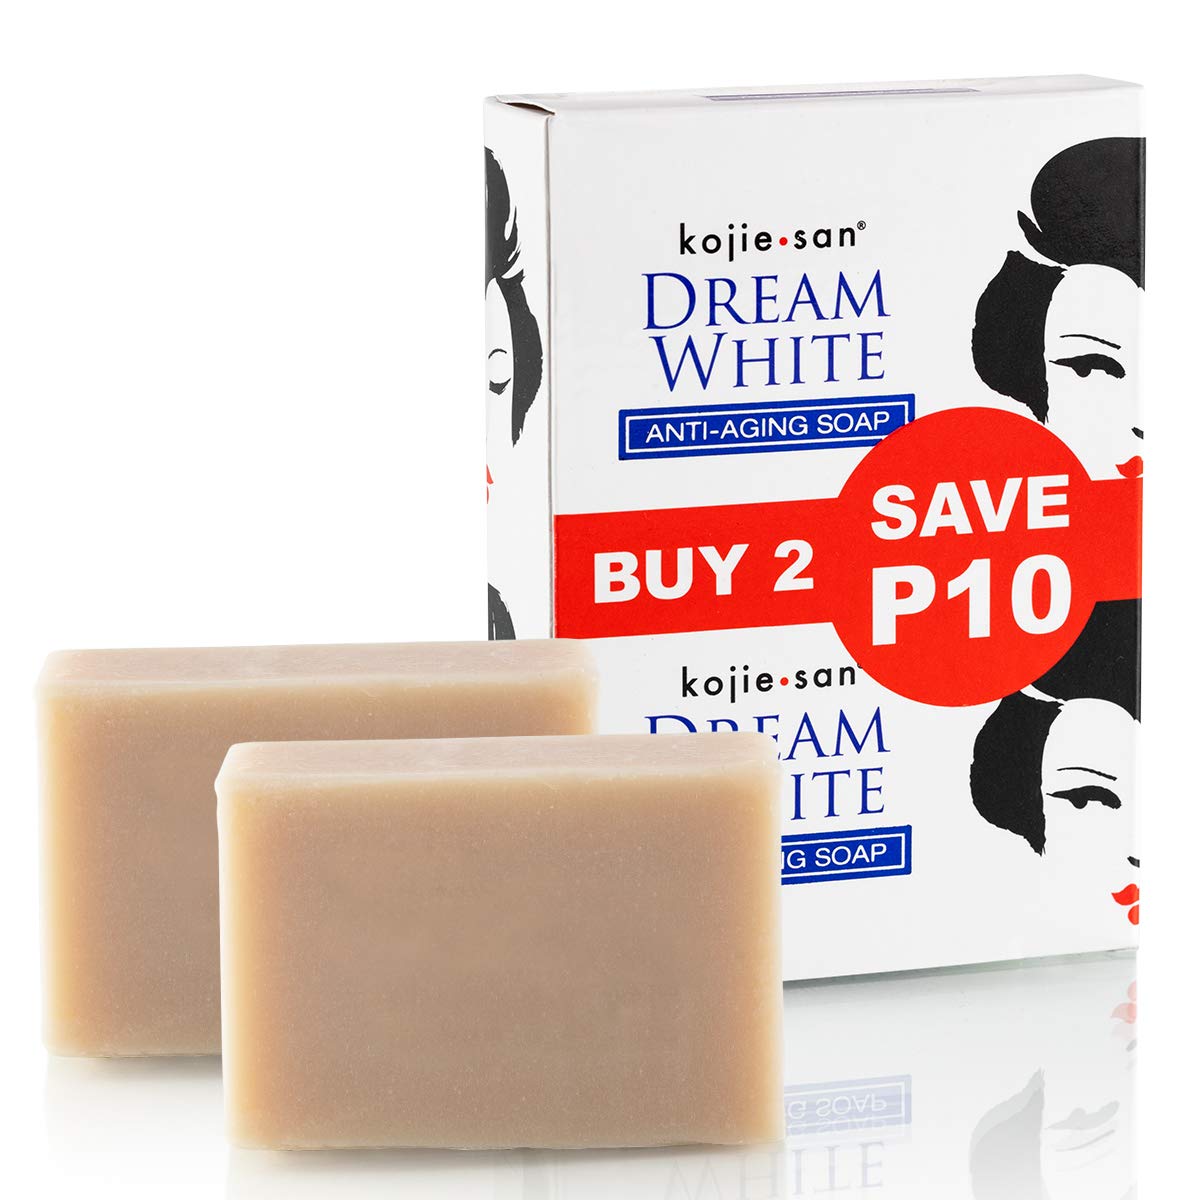 Kojie San Dream White Soap Anti-Aging 2 Bars - 65g